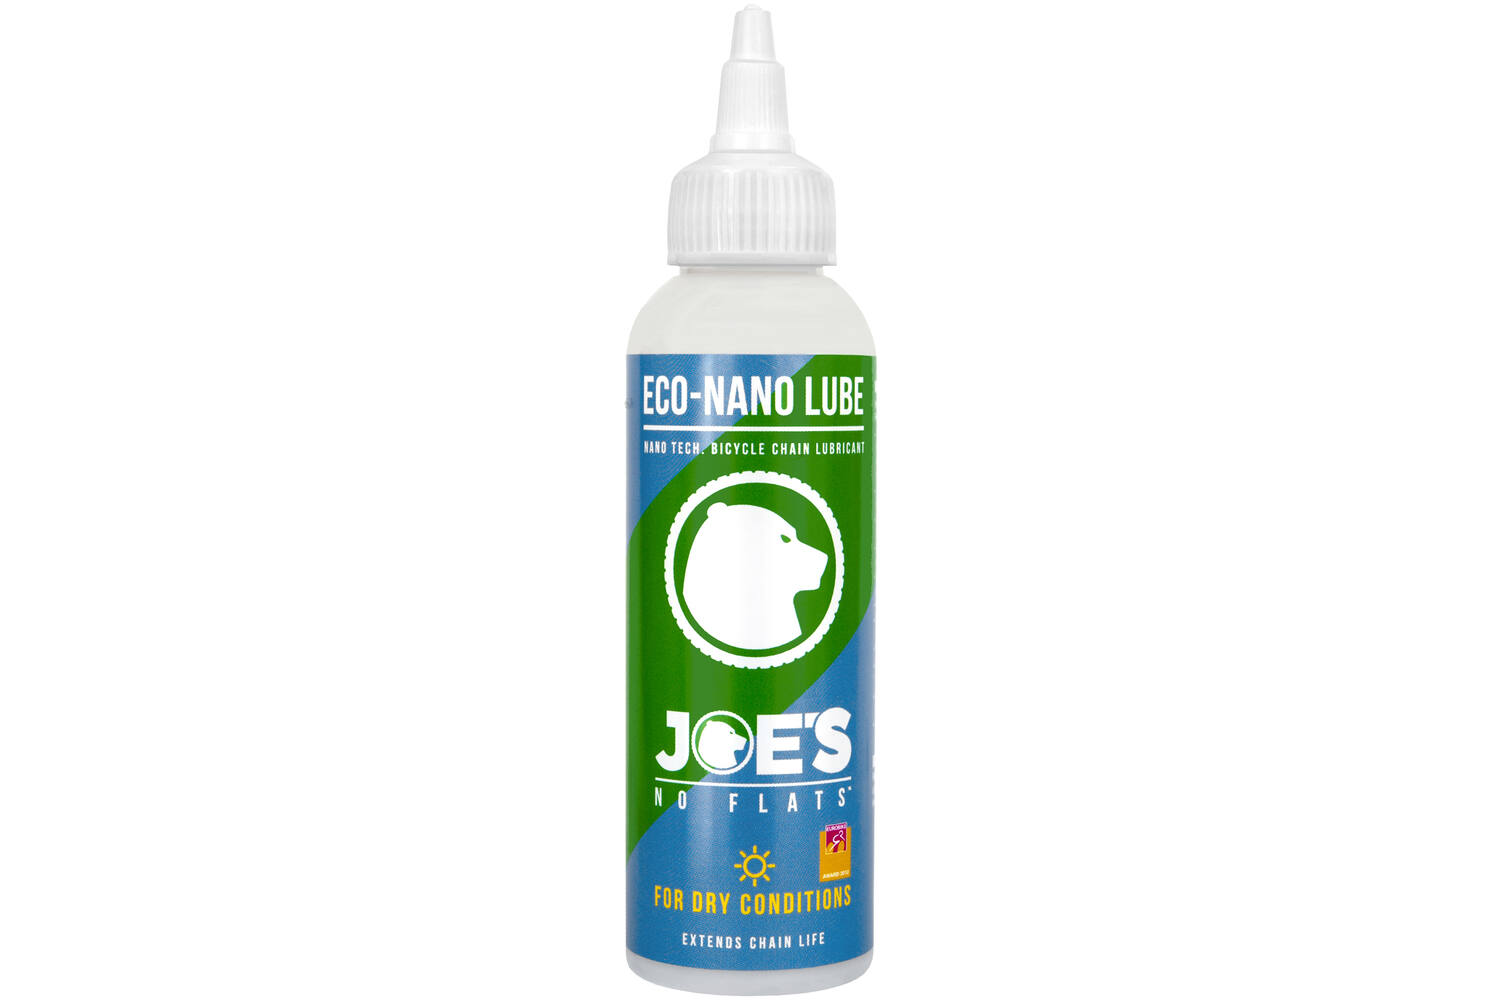 Joe's no flats - eco nano lubrifiant 125 ml (flacon compte-gouttes) pour conditions sèches